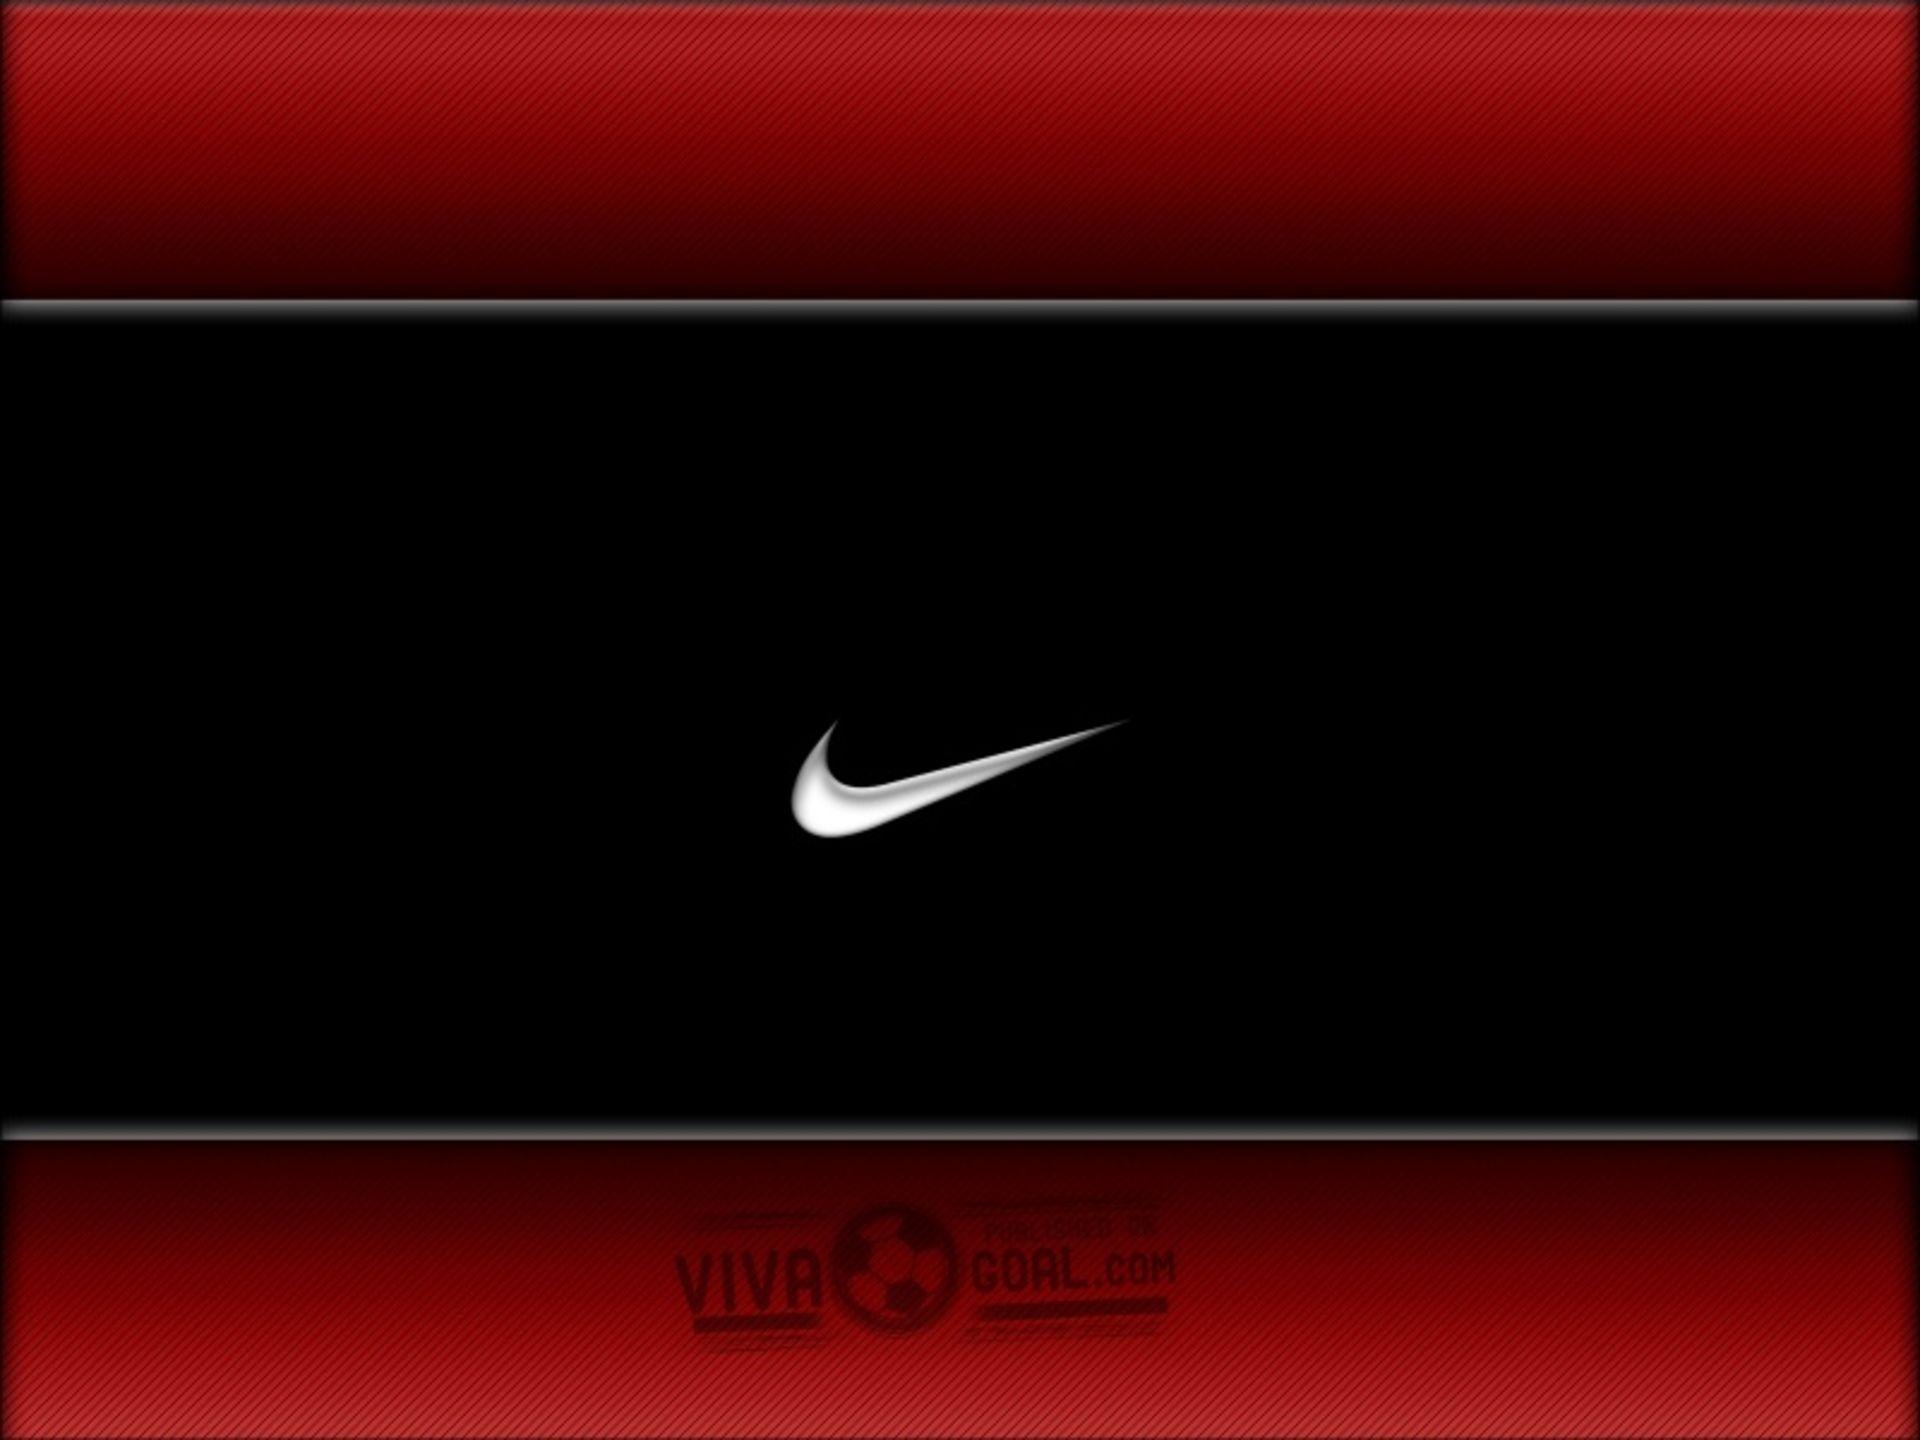 Red And Black Brands Nike Logo Wallpaper Deskt Wallpaper